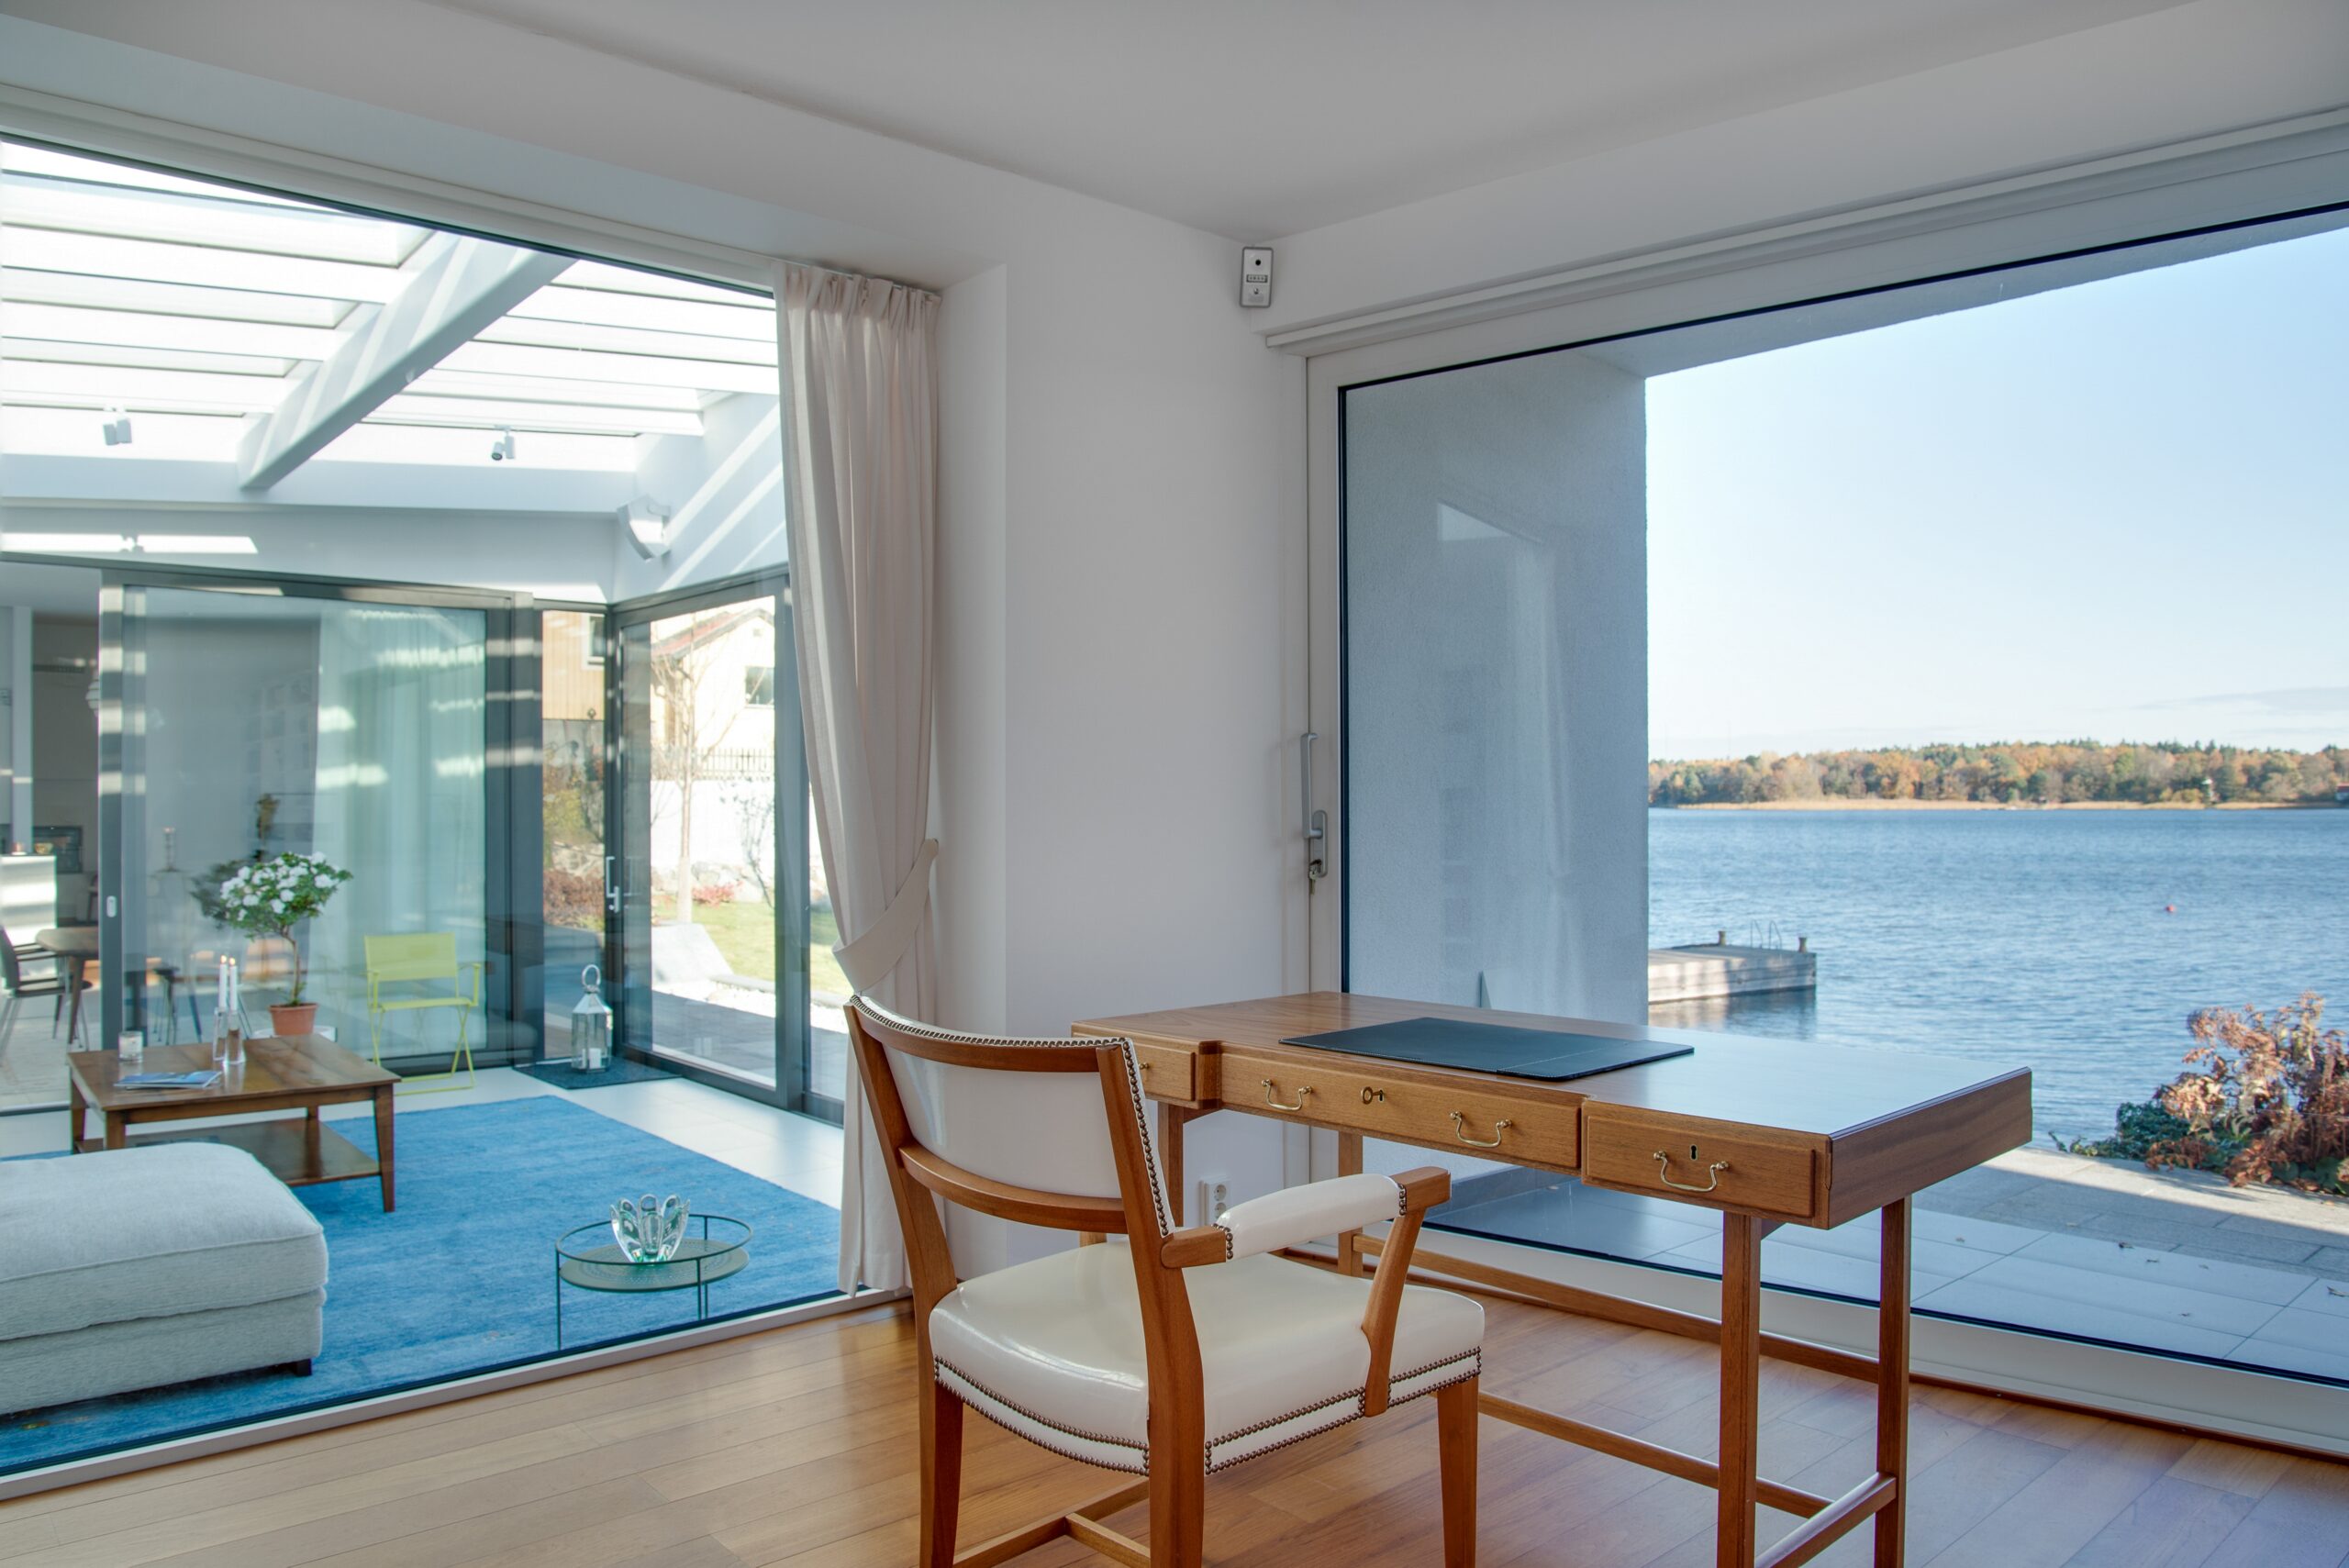 luxury-beach-house-with-glass-windows-beautiful-scenery-sea-scaled-1.jpg